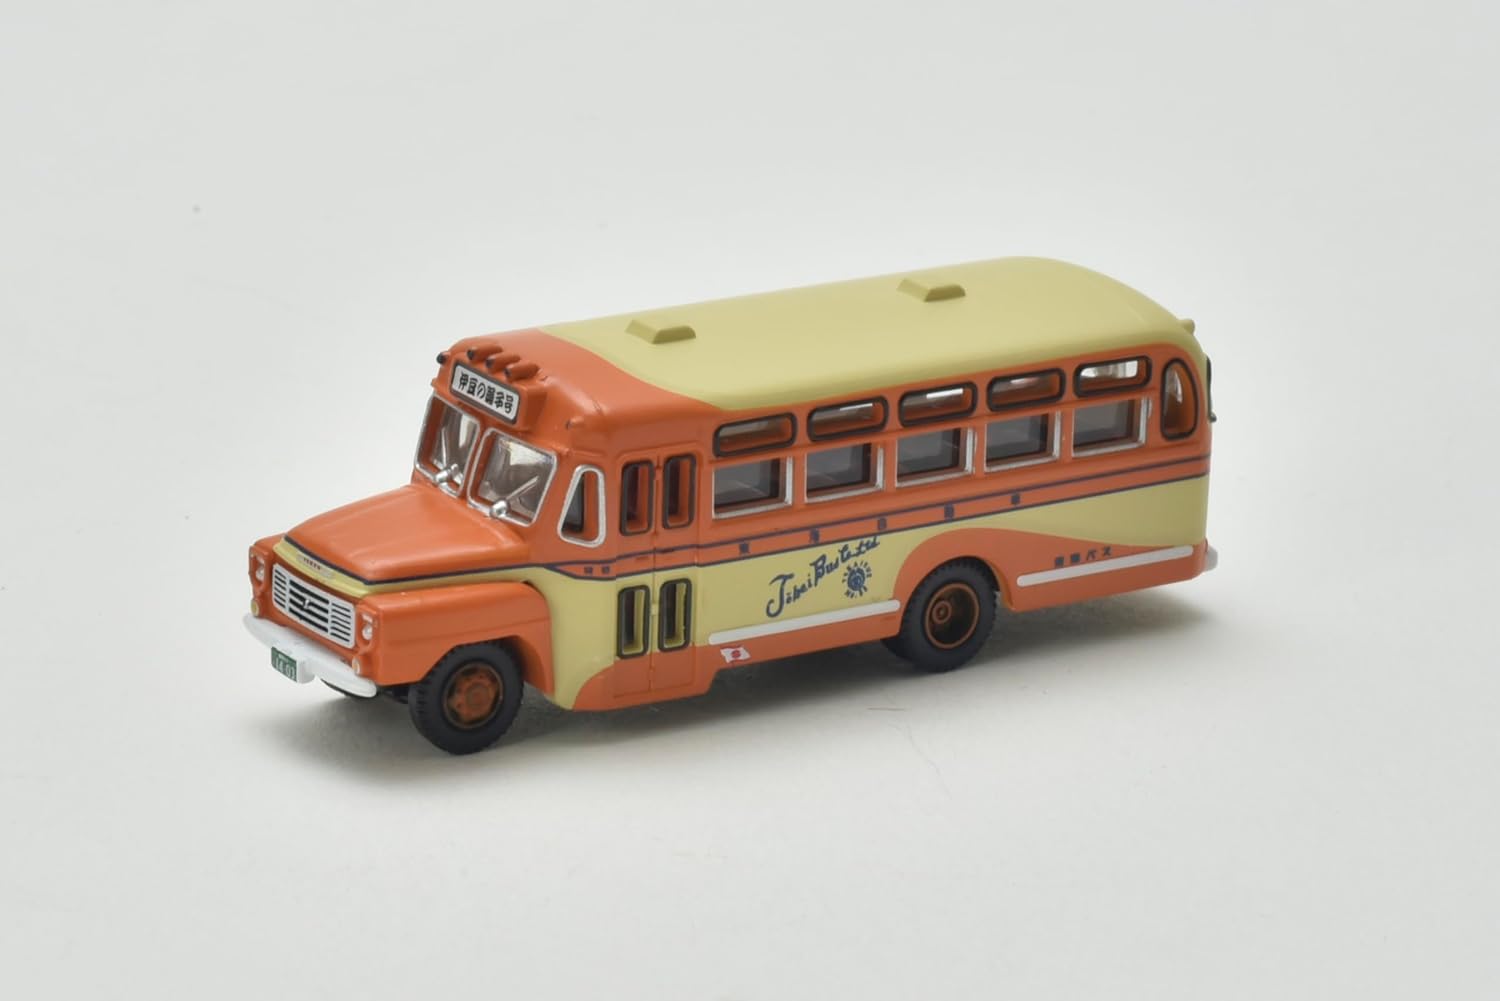 Tomytec The Bus Collection Bus Colle Bonnet Bus Set of 2 for Reiwa, Tokai Motors, Shikoku Kotsu Edition - BanzaiHobby